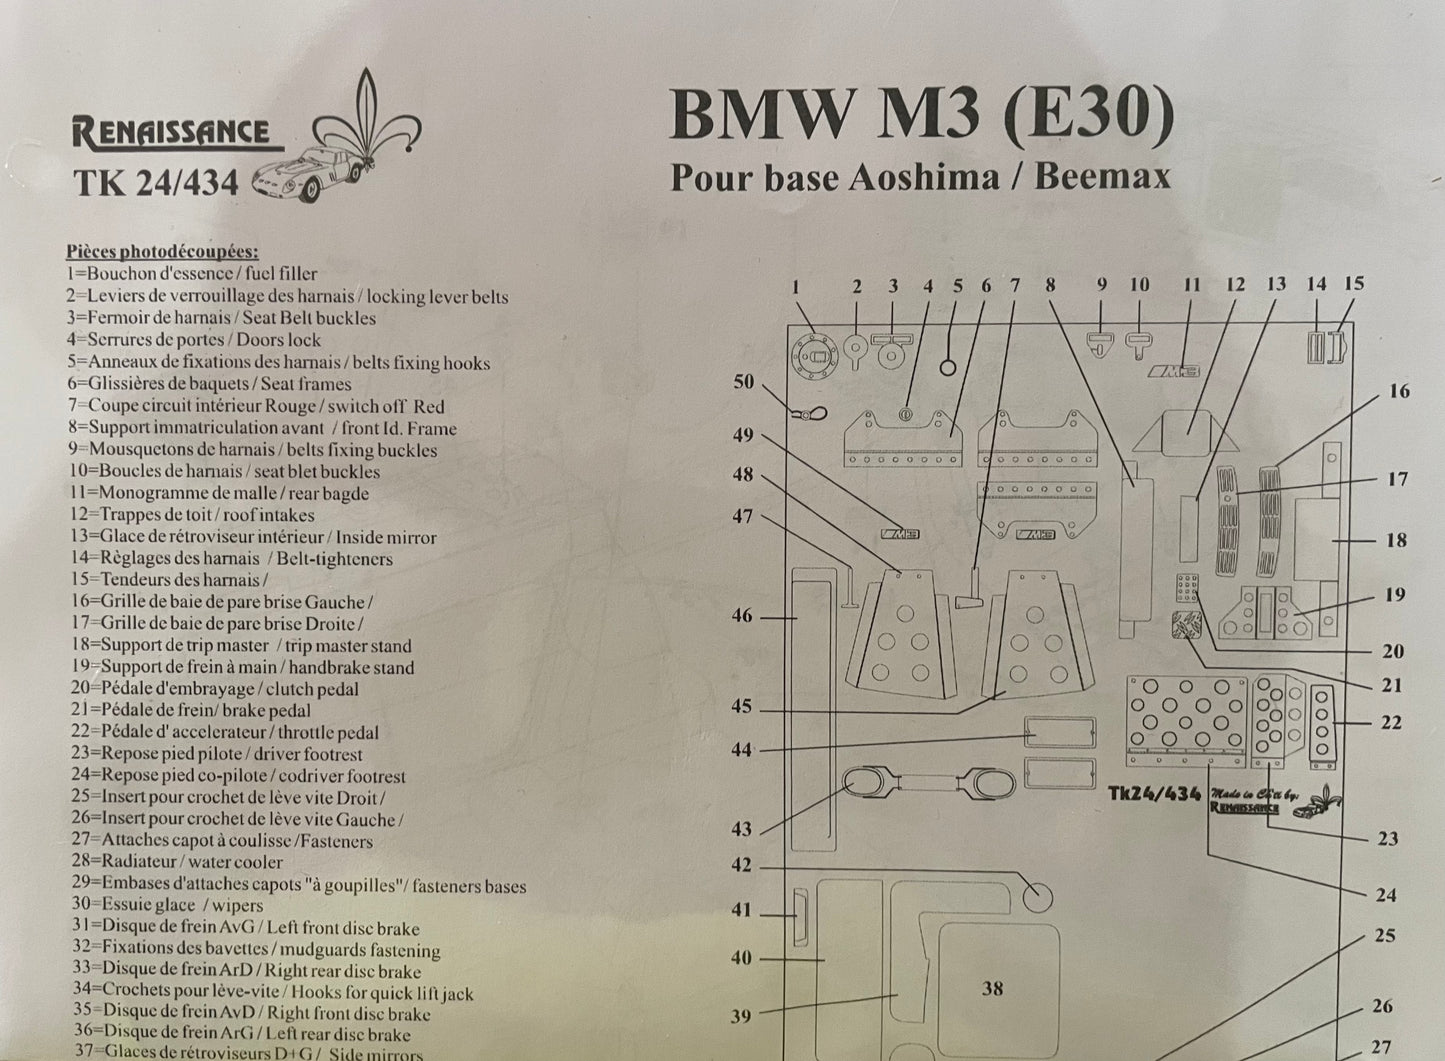 DETAIL SET UP PHOTOETCHED PARTS FOR BMW M3 E30